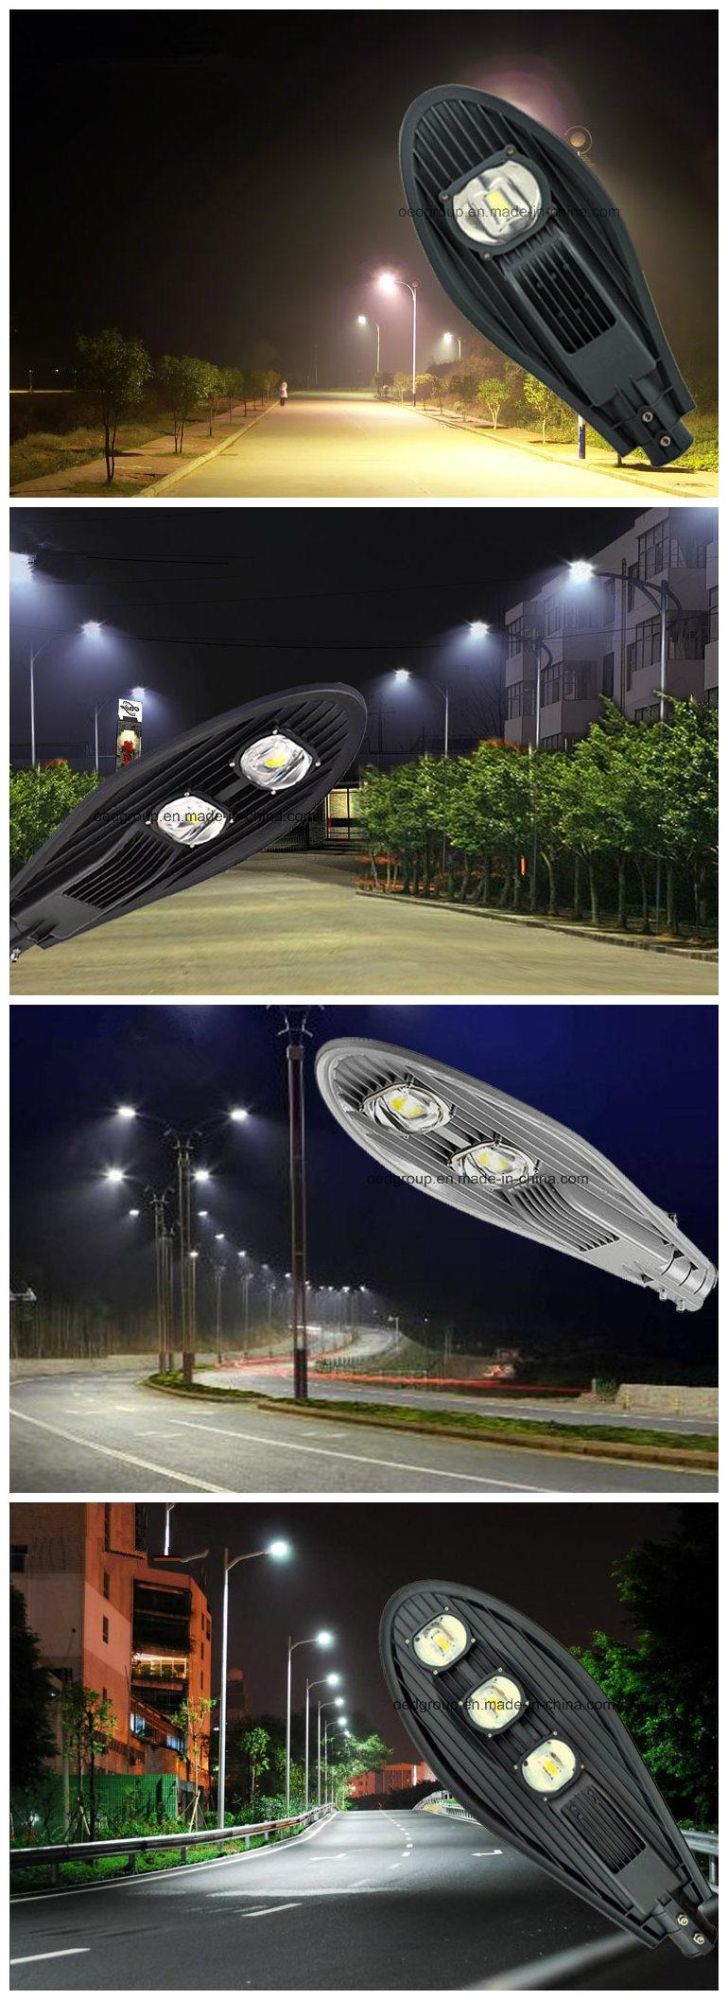 IP66 Outdoor Urban Road Lighting 3 Years Warranty AC85-265V Photocell 150W LED Street Light